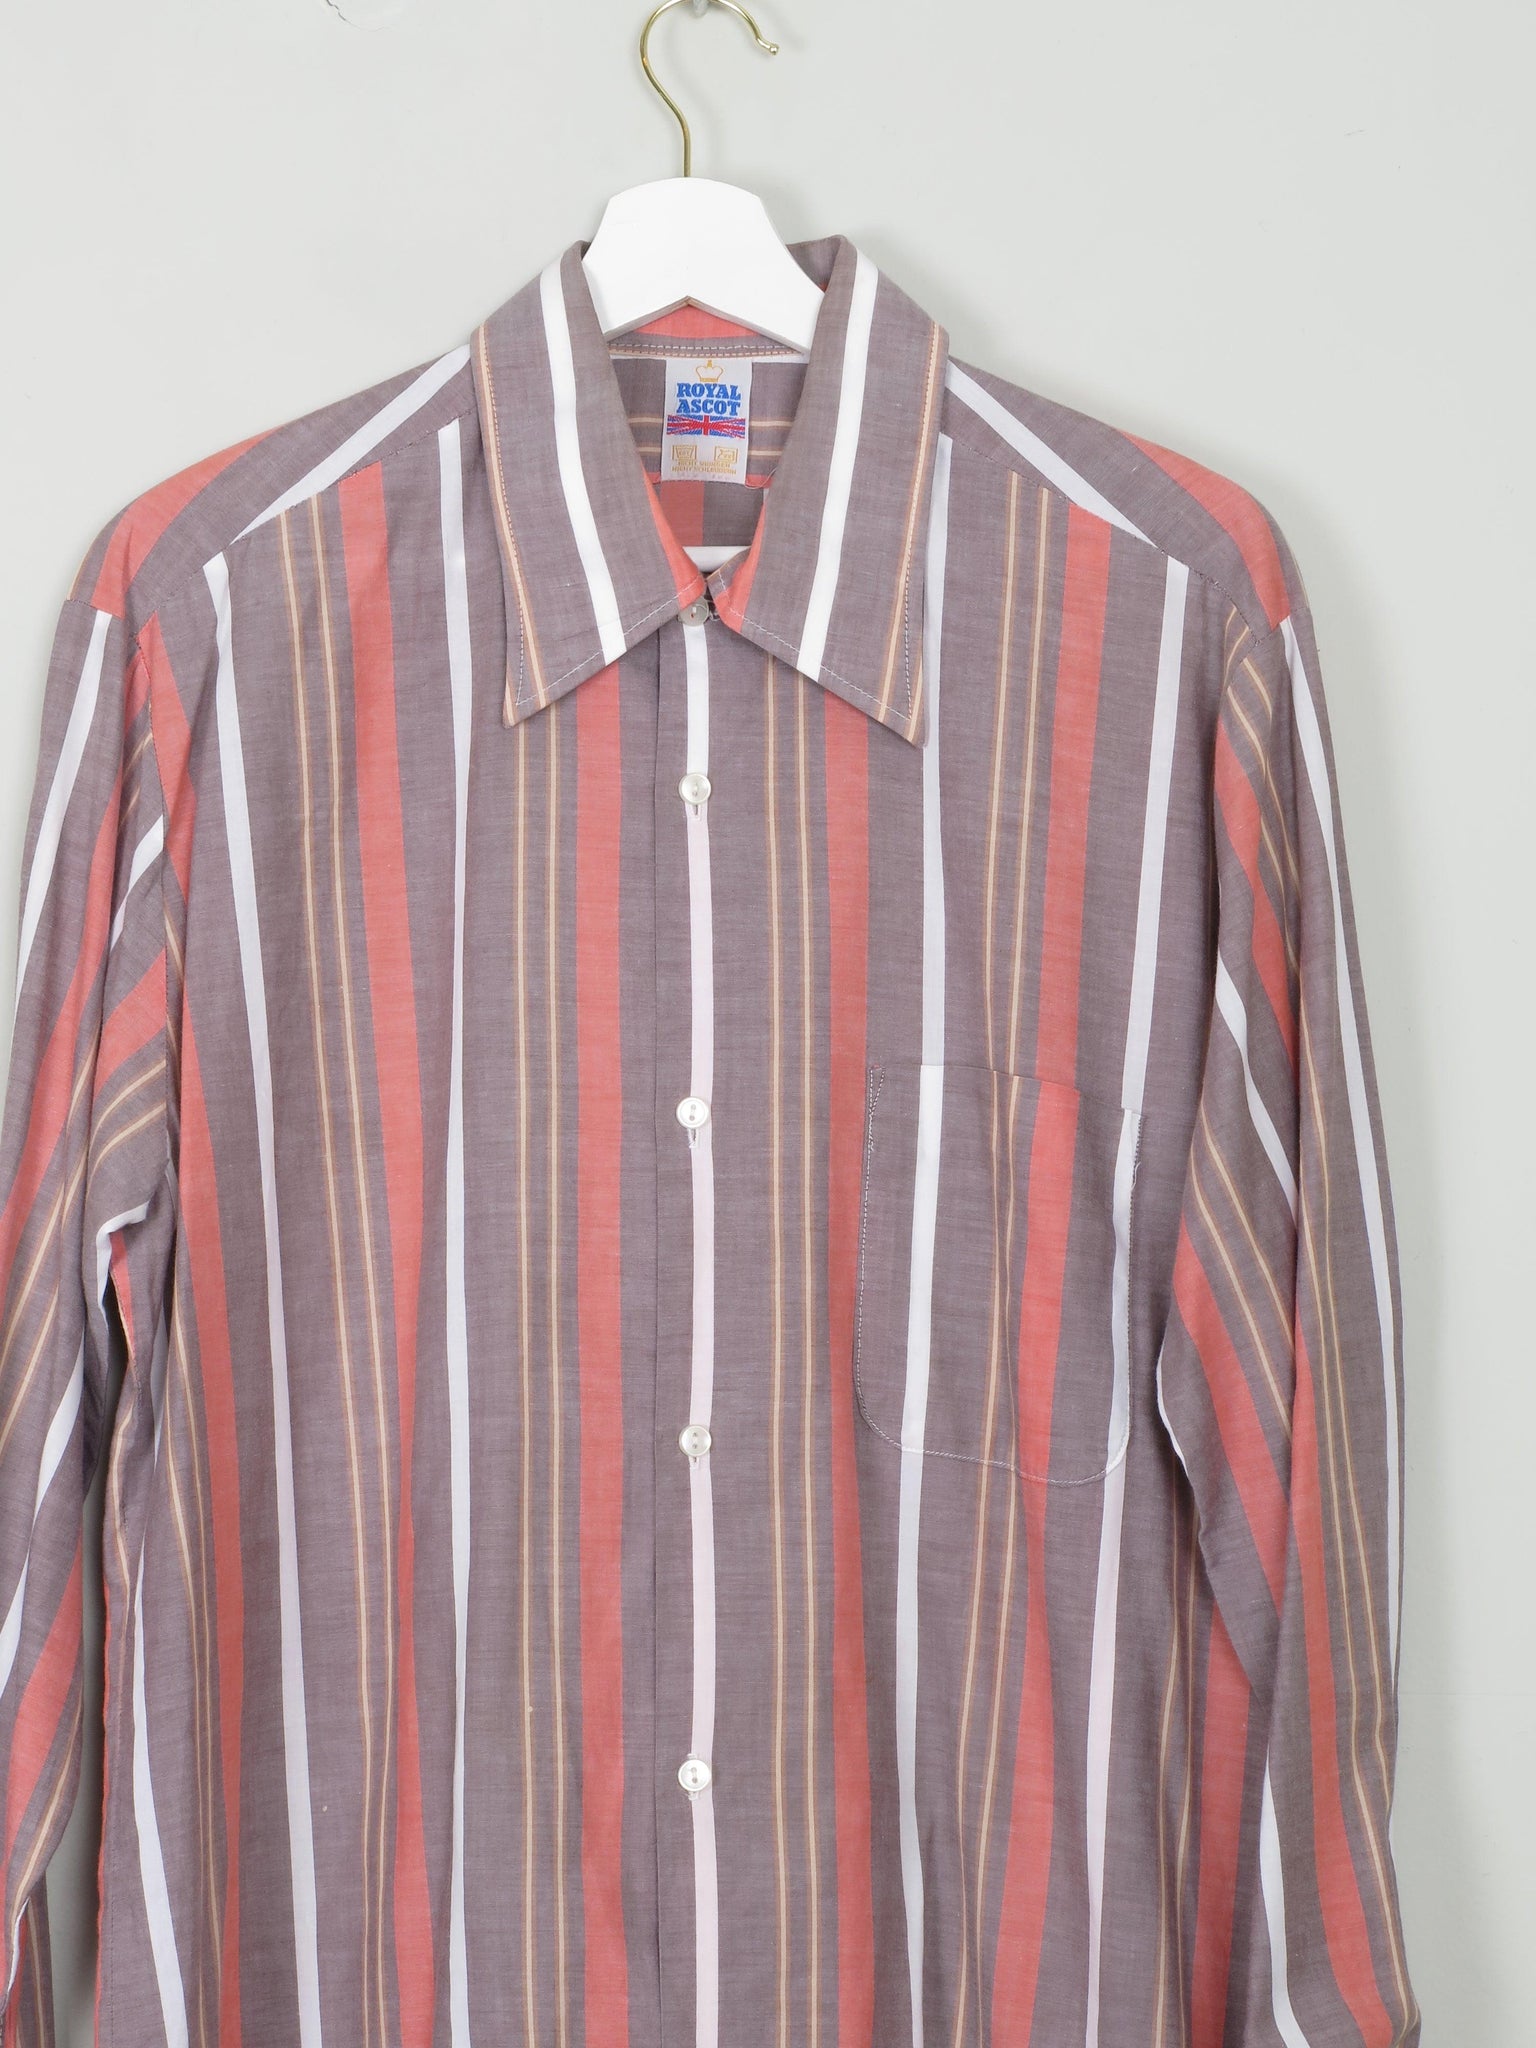 Men's Vintage Shirt 1970's Striped Royal Ascot L - The Harlequin